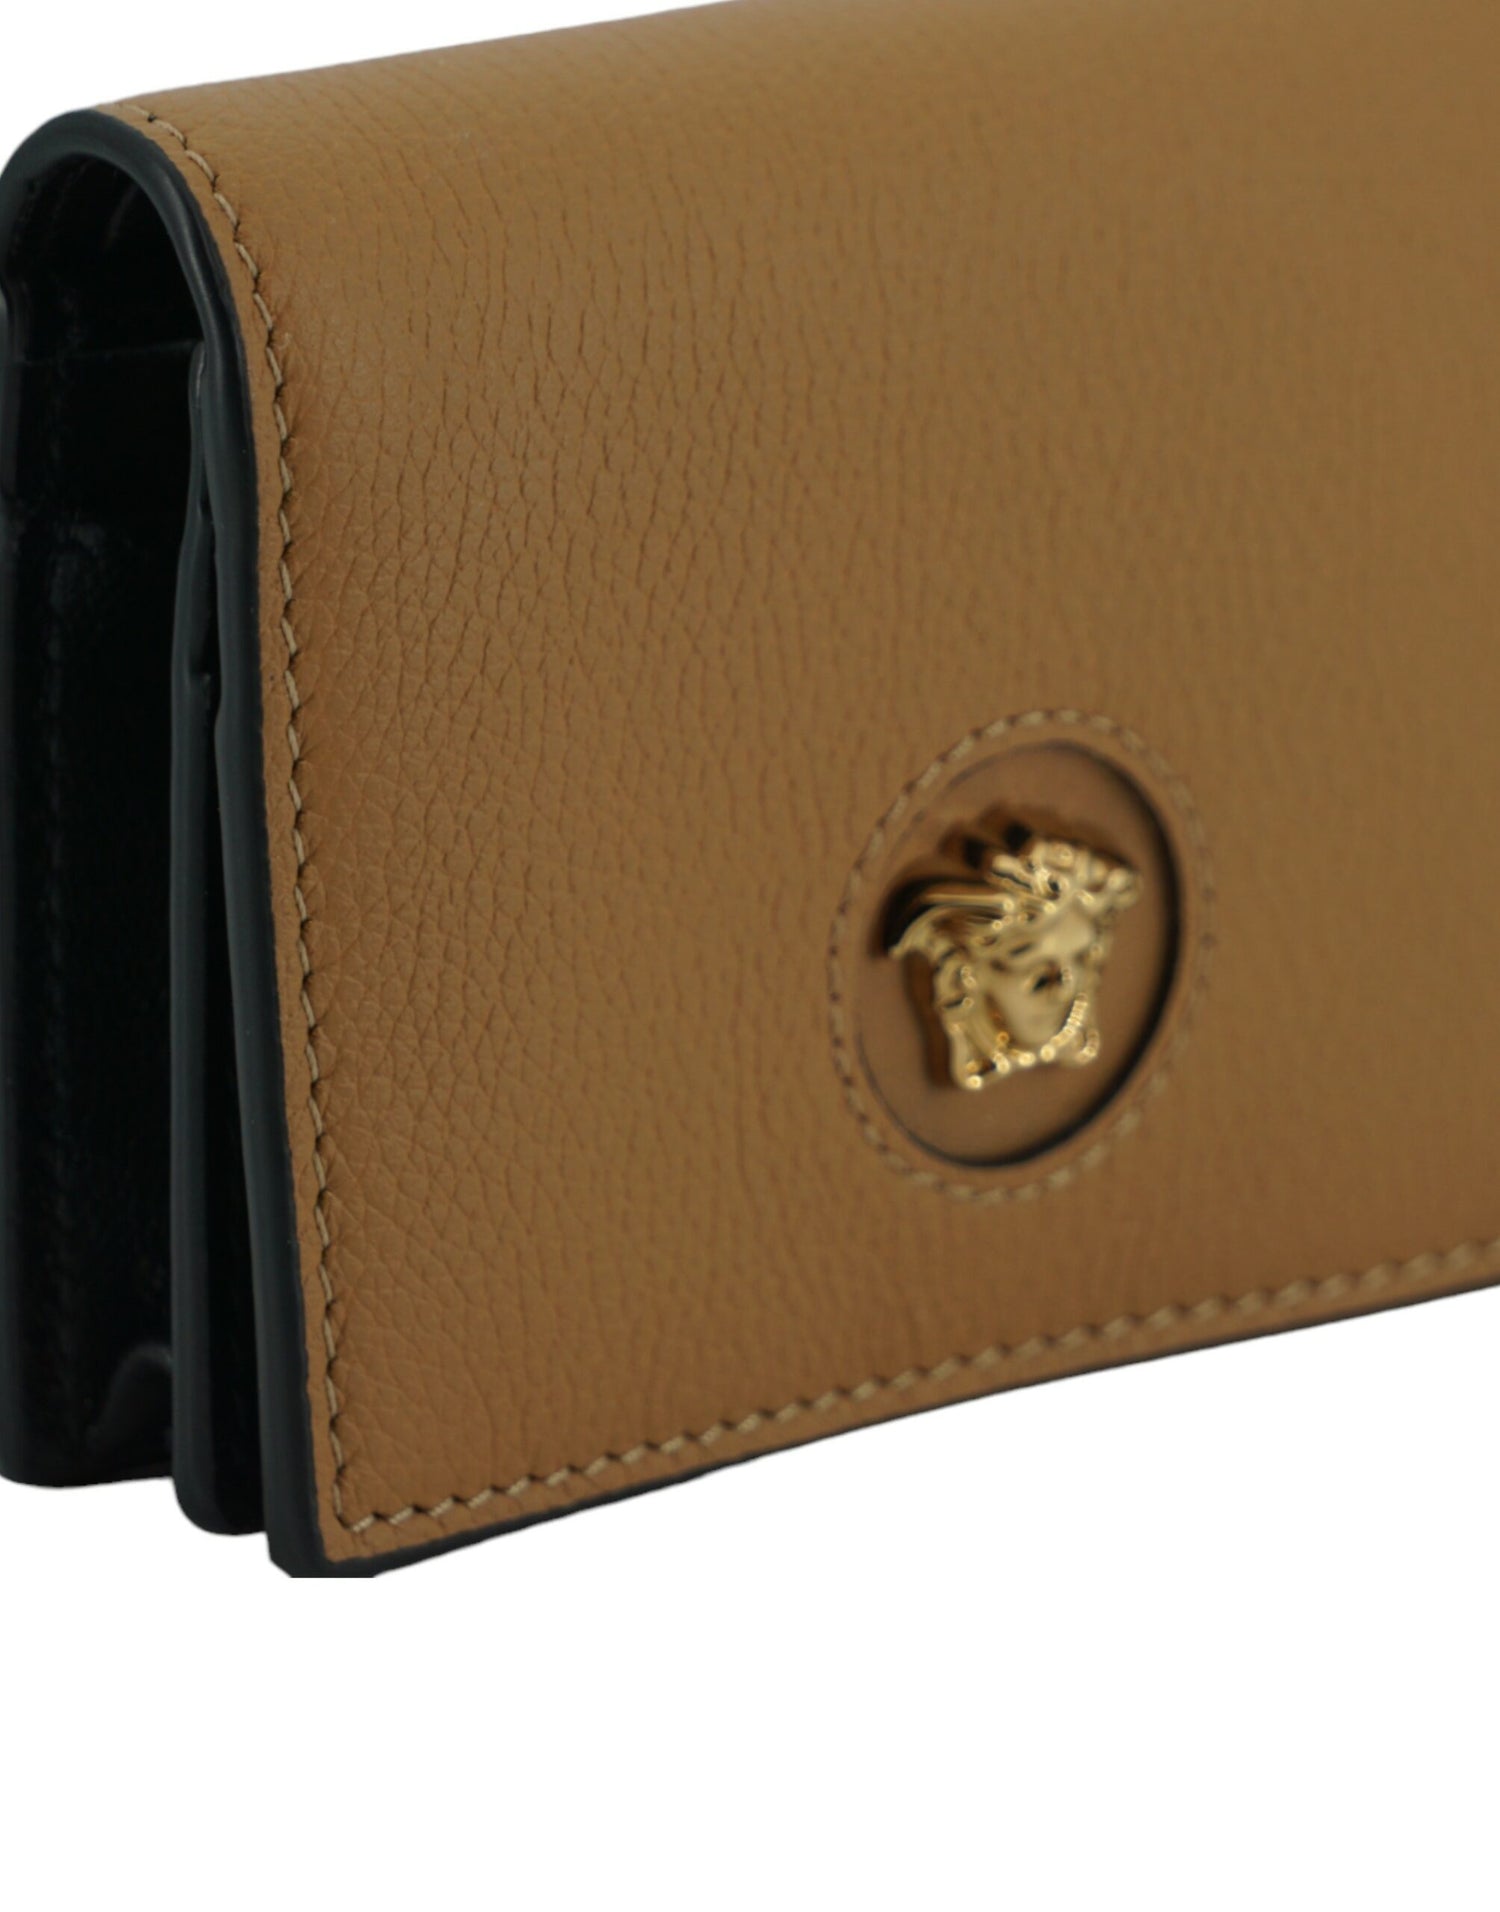 Versace Brown Calf Leather Compact Wallet - DEA STILOSA MILANO